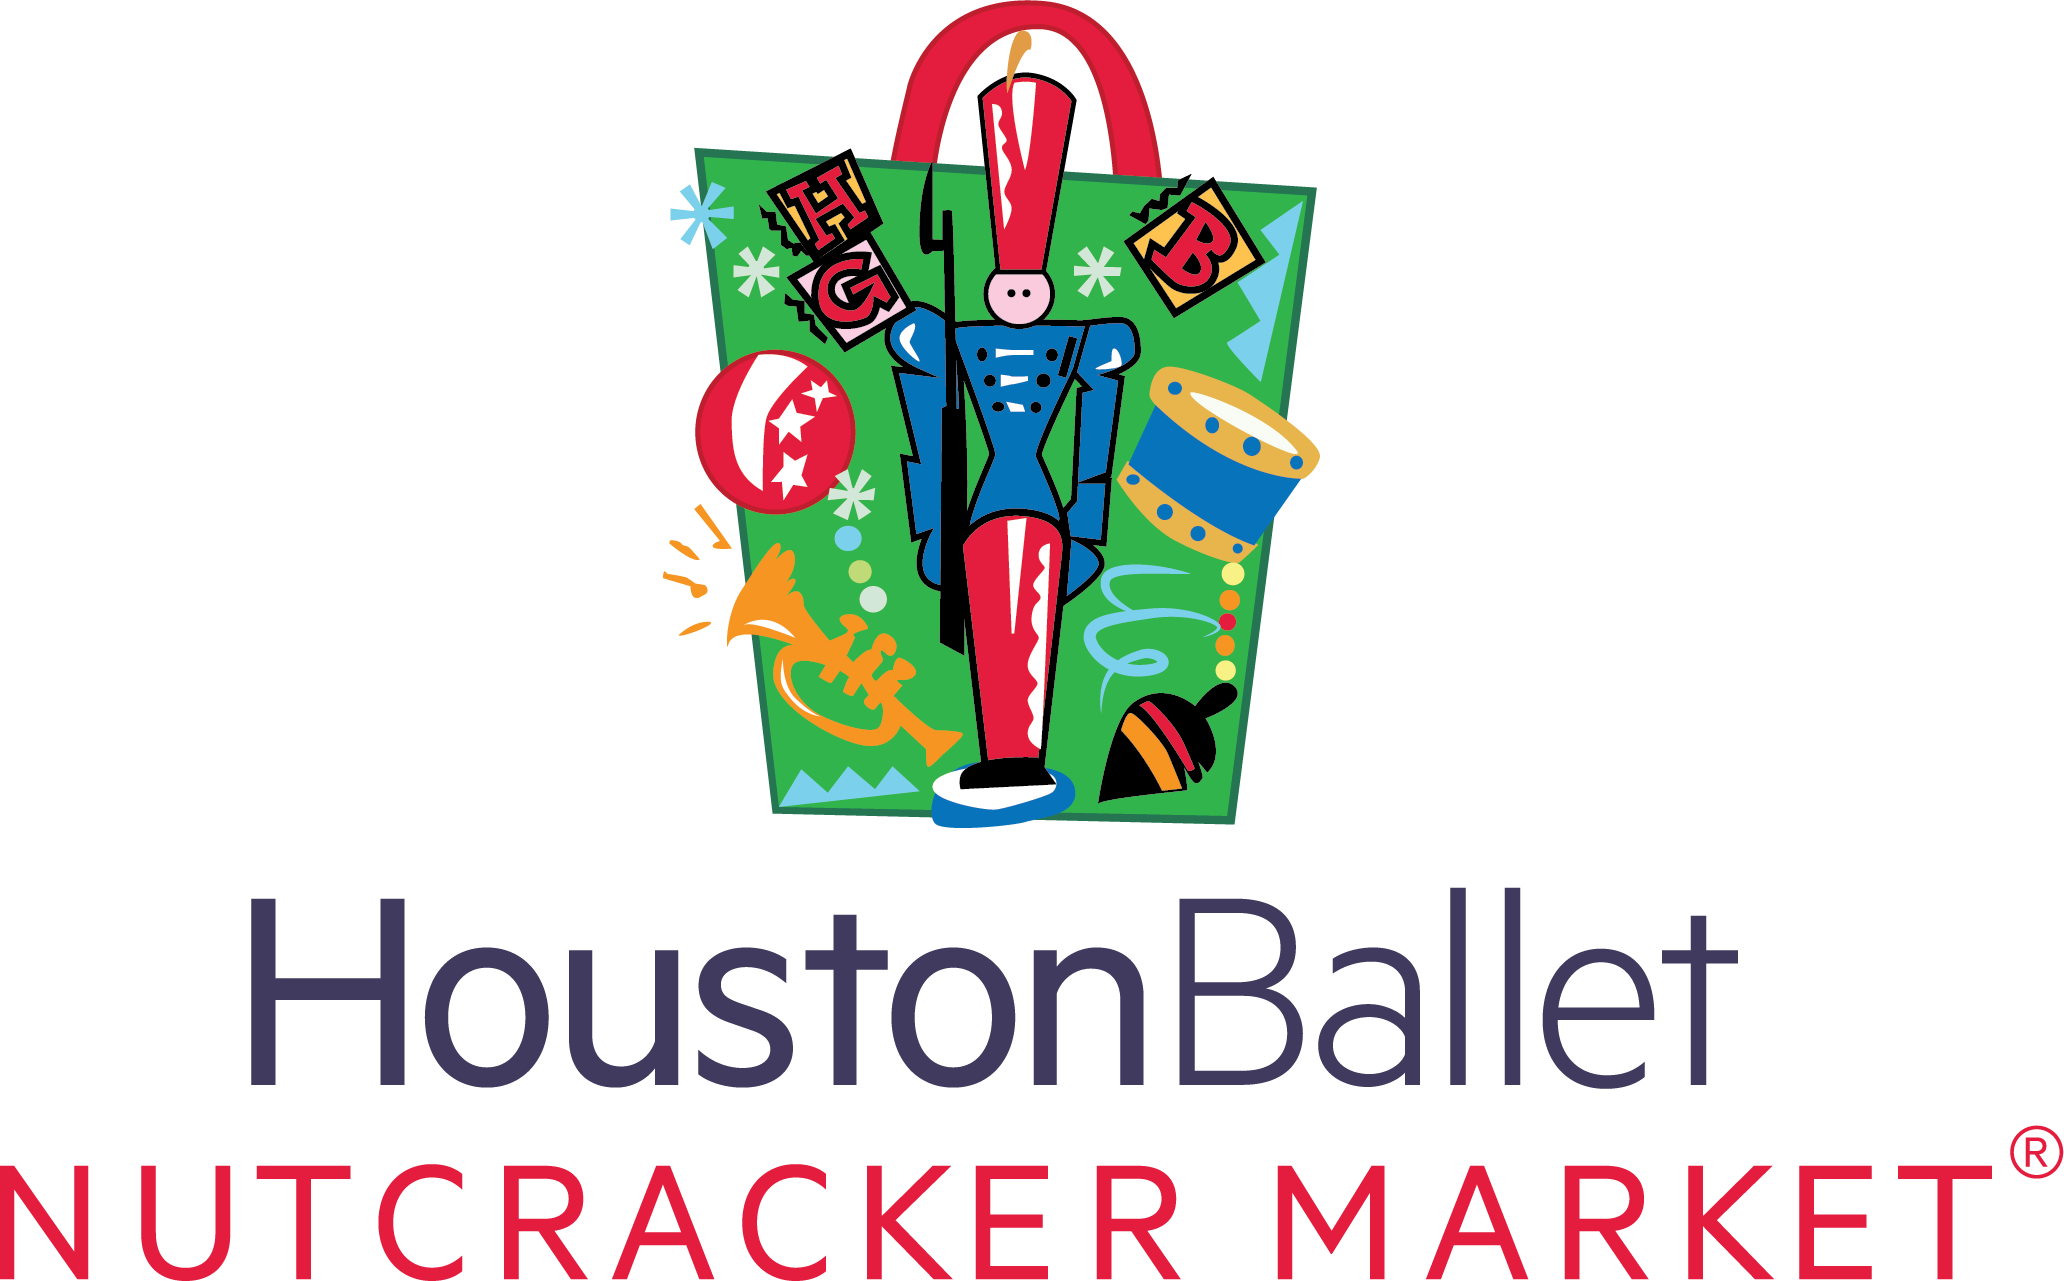 GRAPHIC: The 2018 Houston Ballet Nutcracker Market will take place at NRG Center Nov. 8-11. Graphic courtesy of Houston Ballet Nutcracker Market.